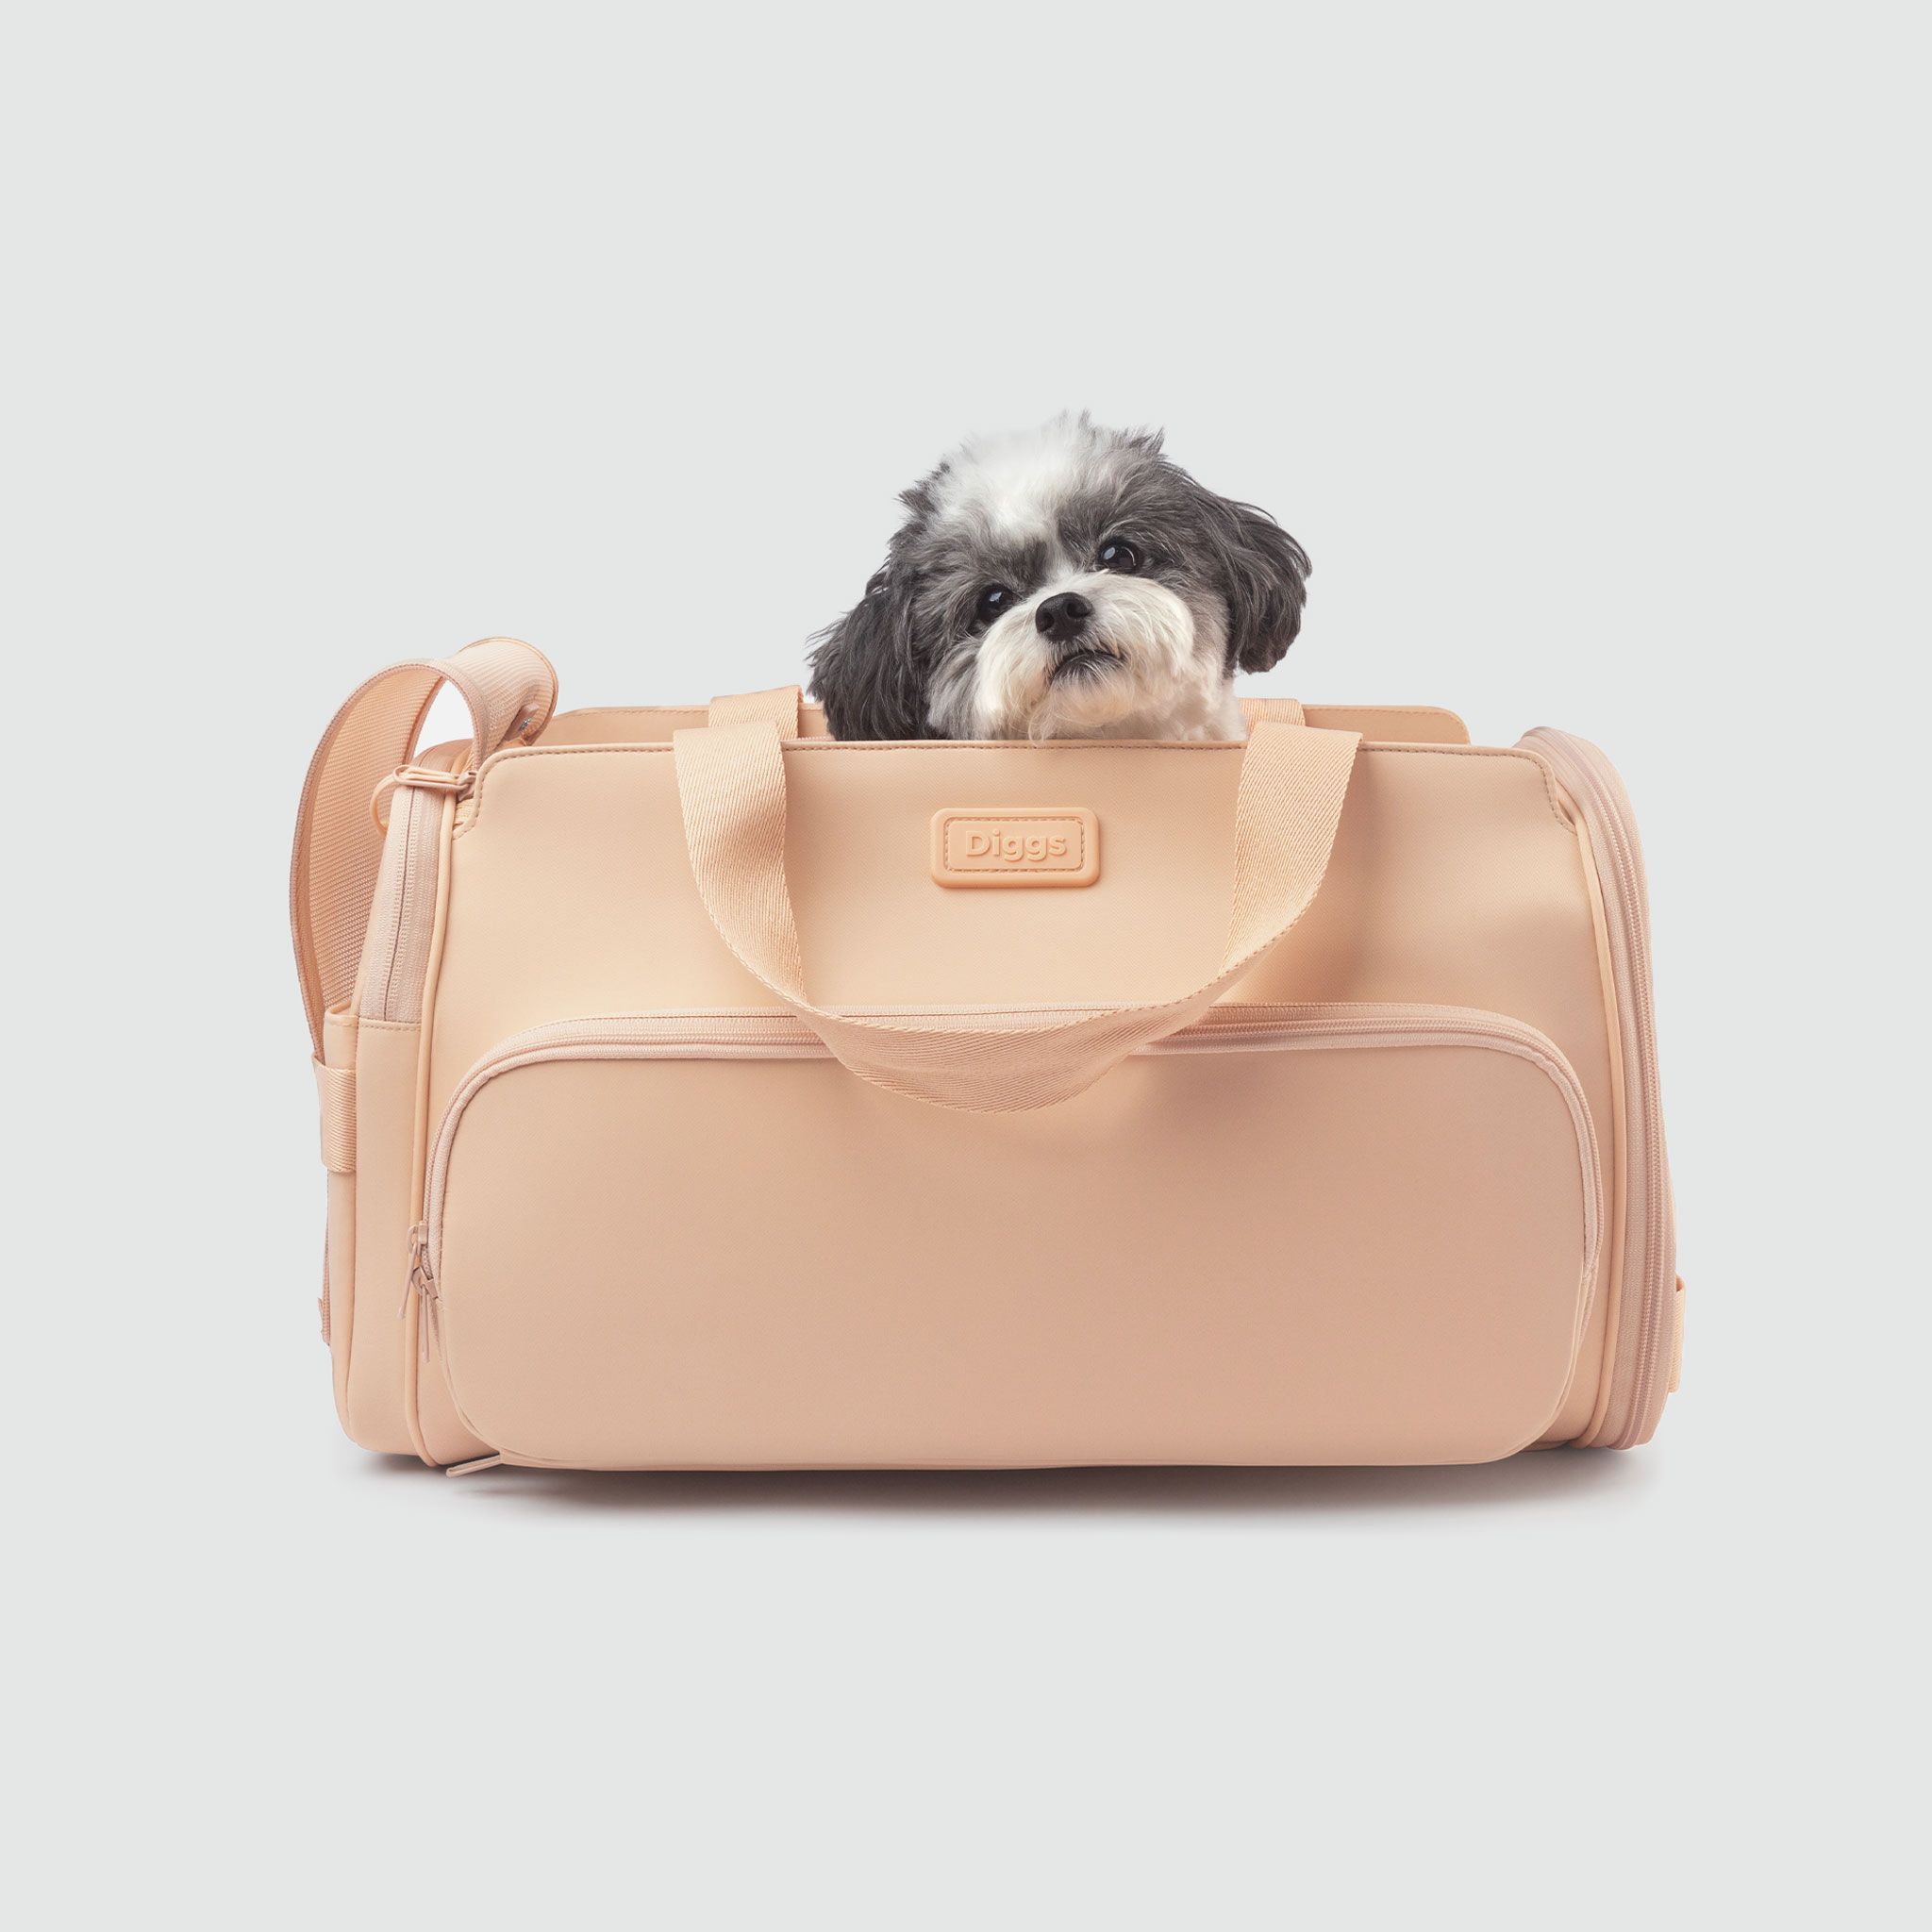 A small dog sitting inside of a pink Passenger pet carrier bag